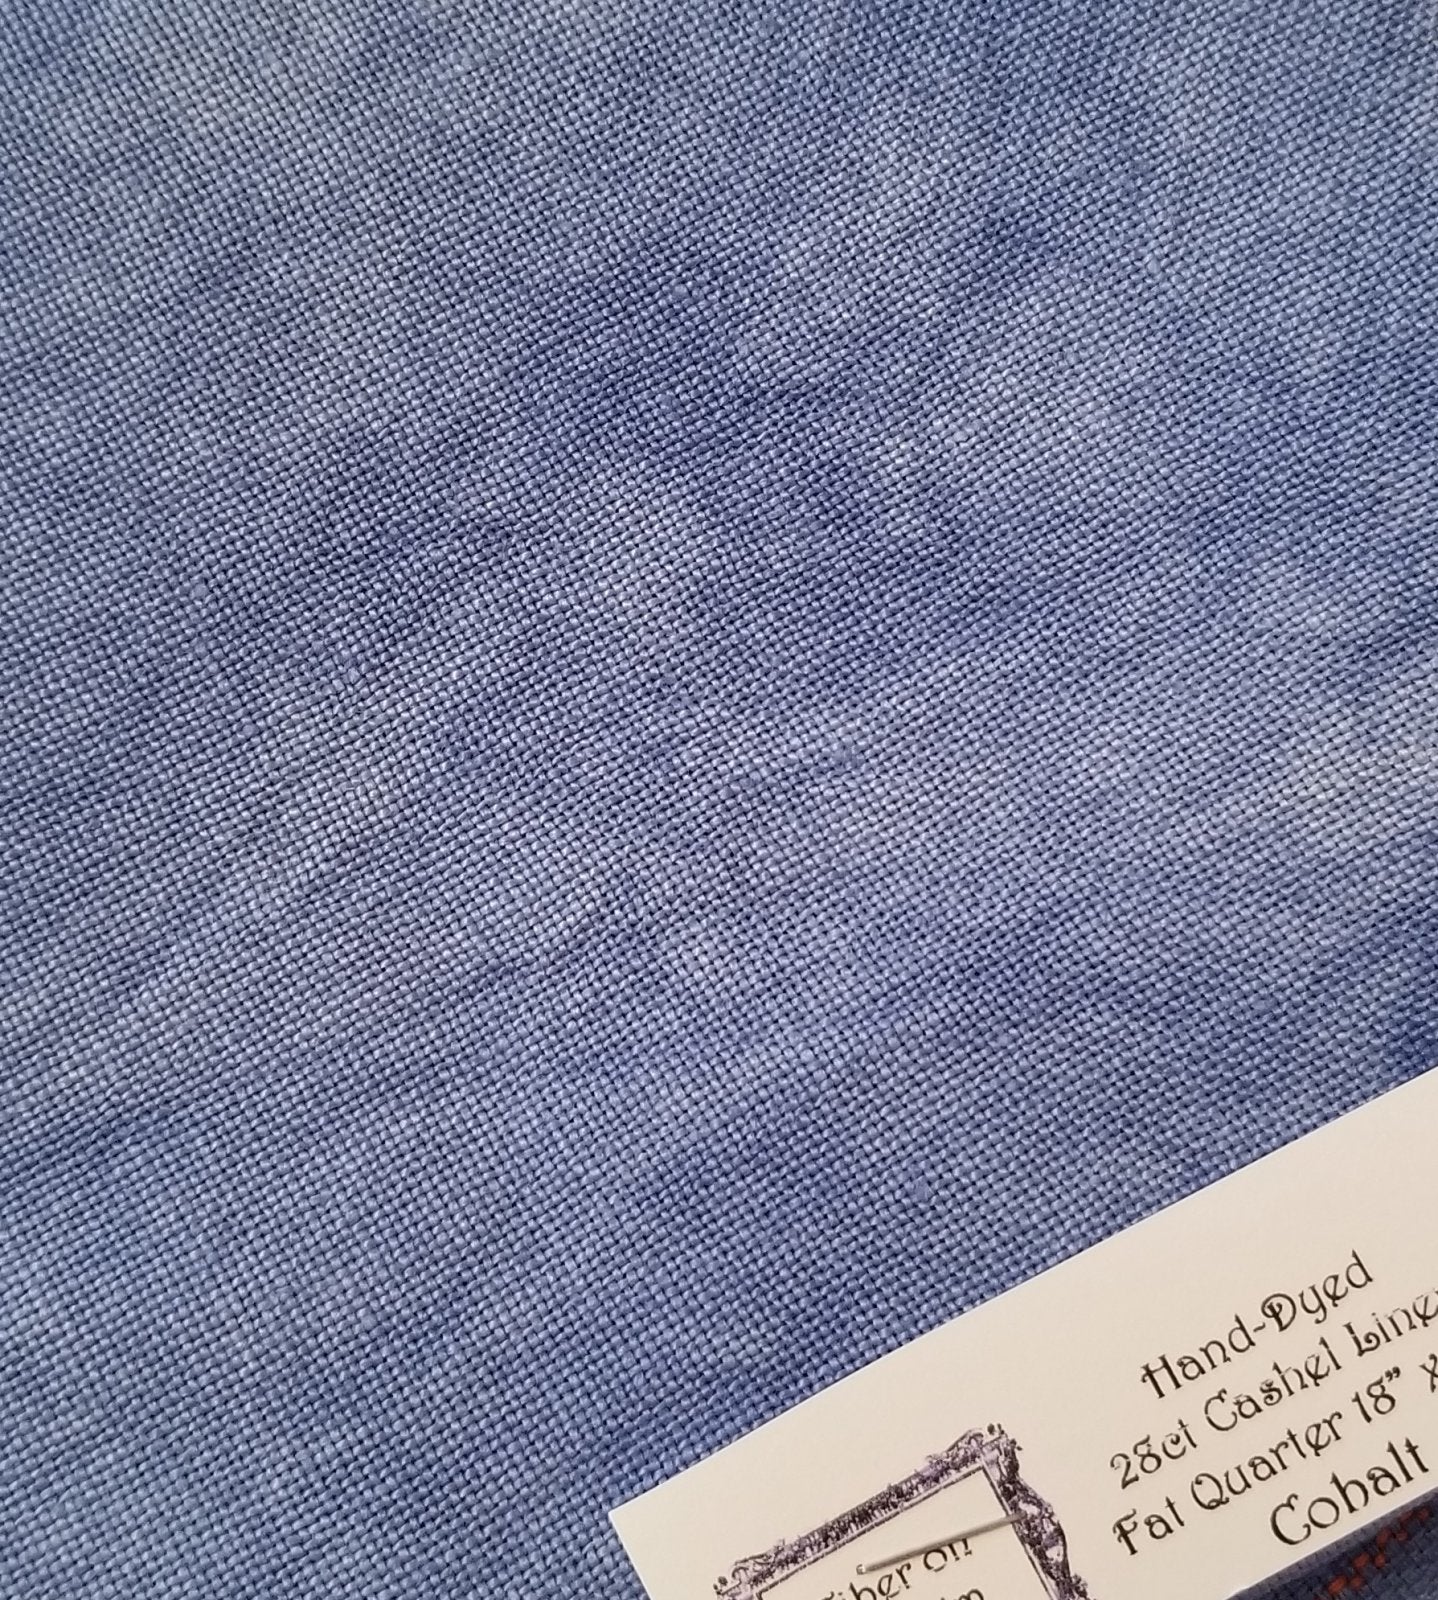 Cashel Linen - for Cross-Stitch